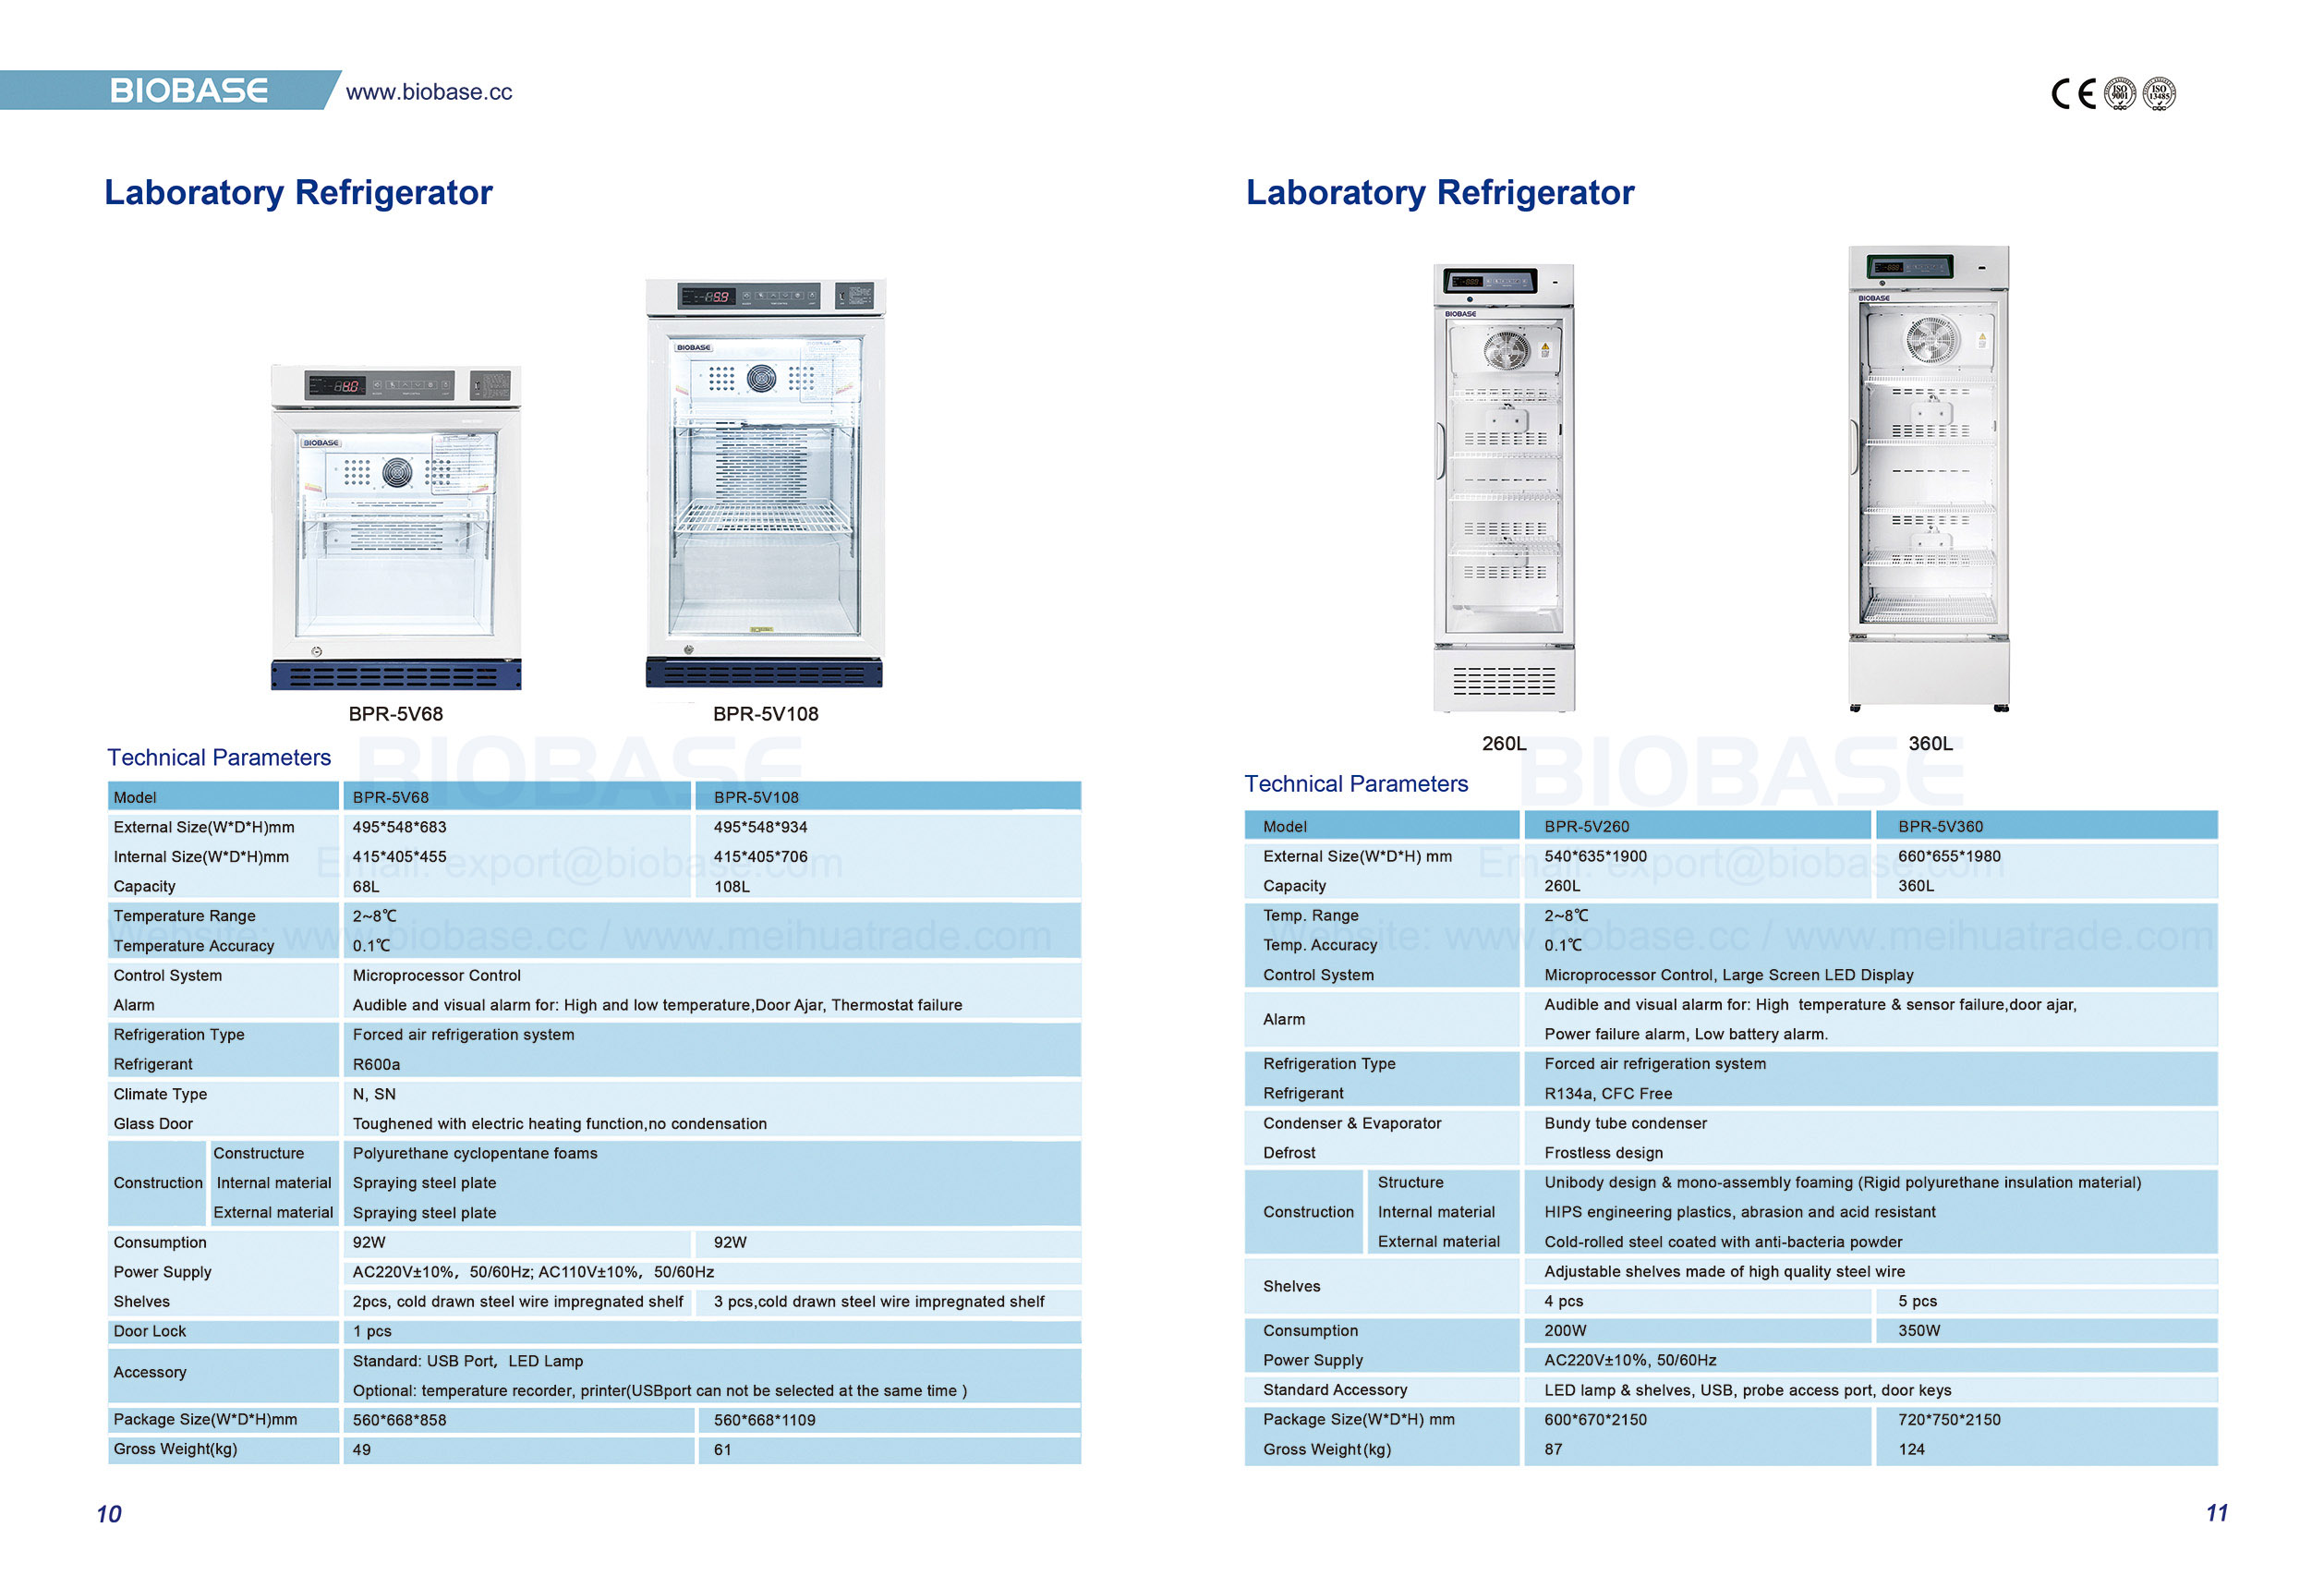 10-11 laboratory Refrigerator